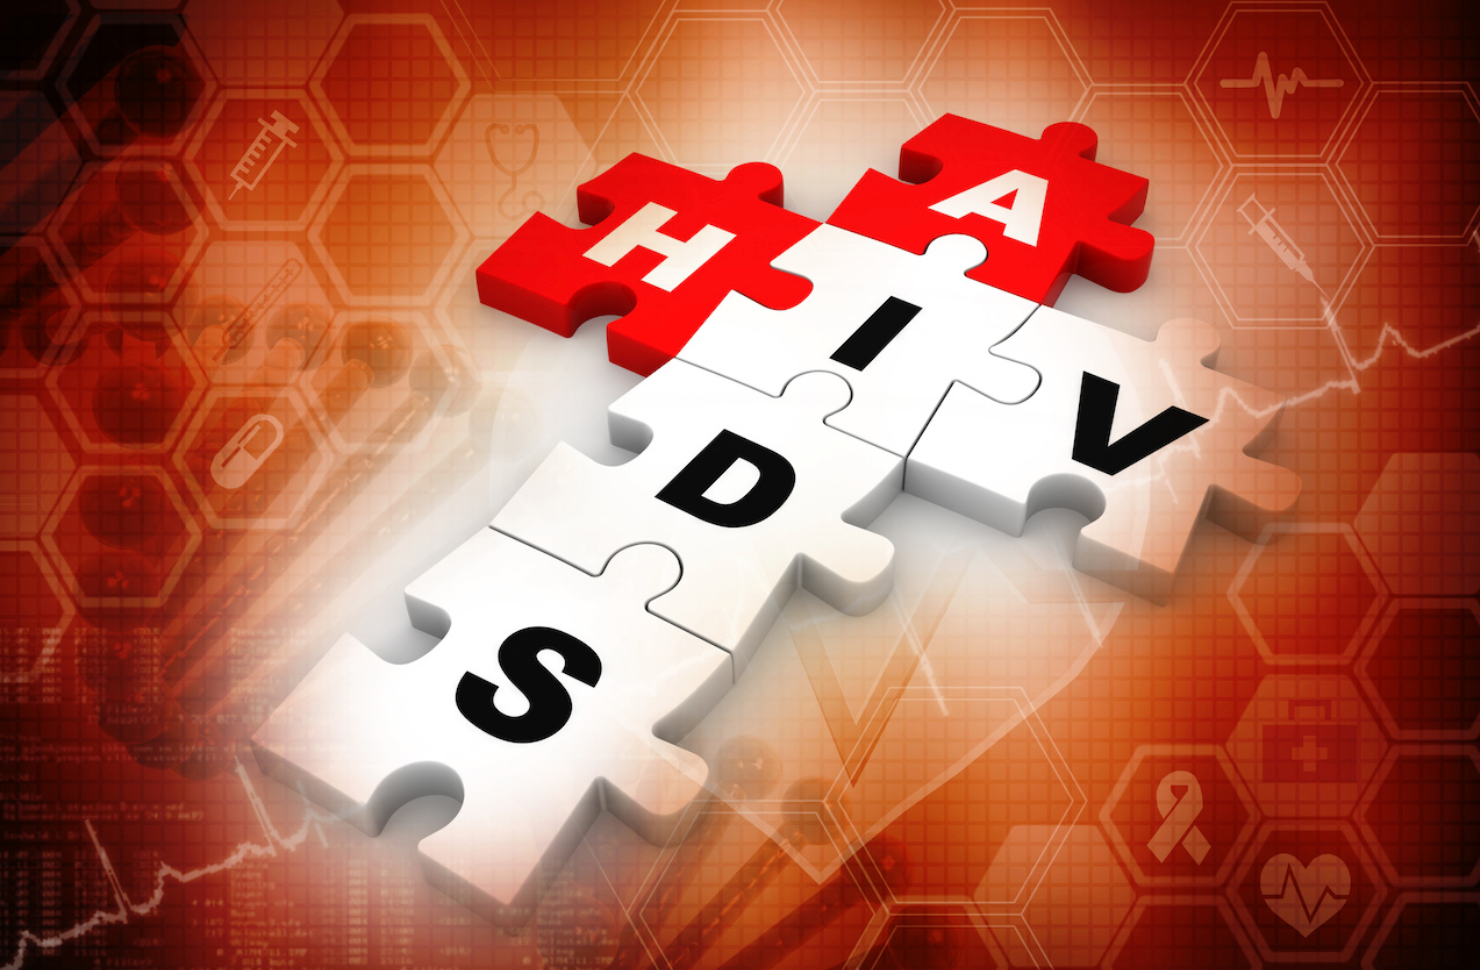 Regular Testing Needed for HIV PrEP, Study Shows